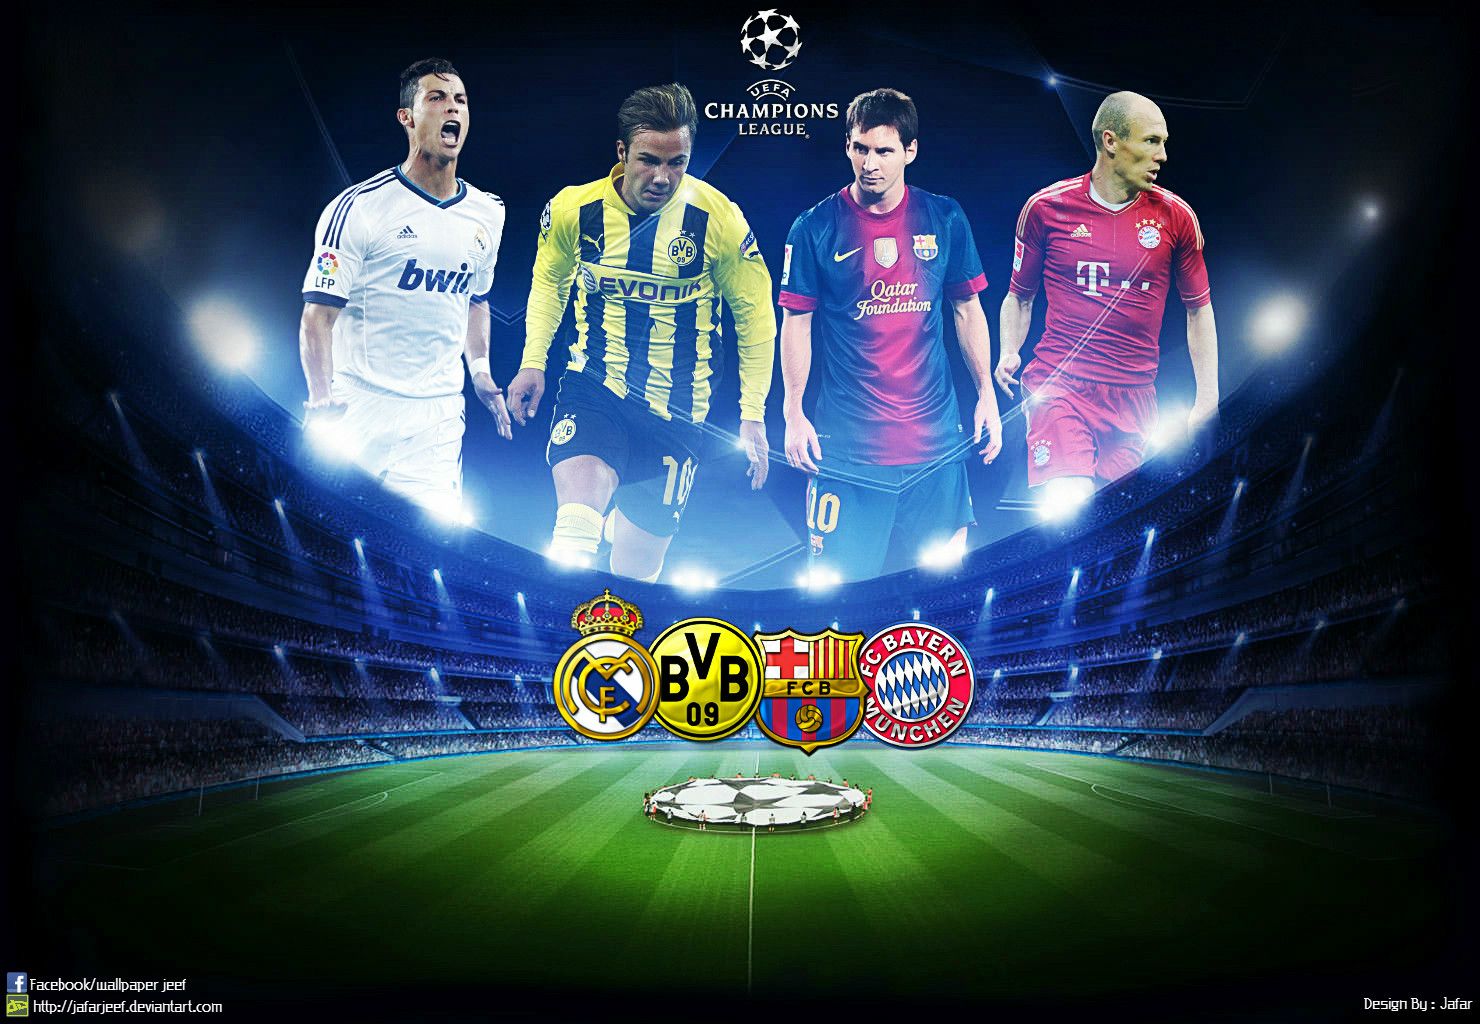 Uefa Champions League Logo Wallpaper - wallpaper.